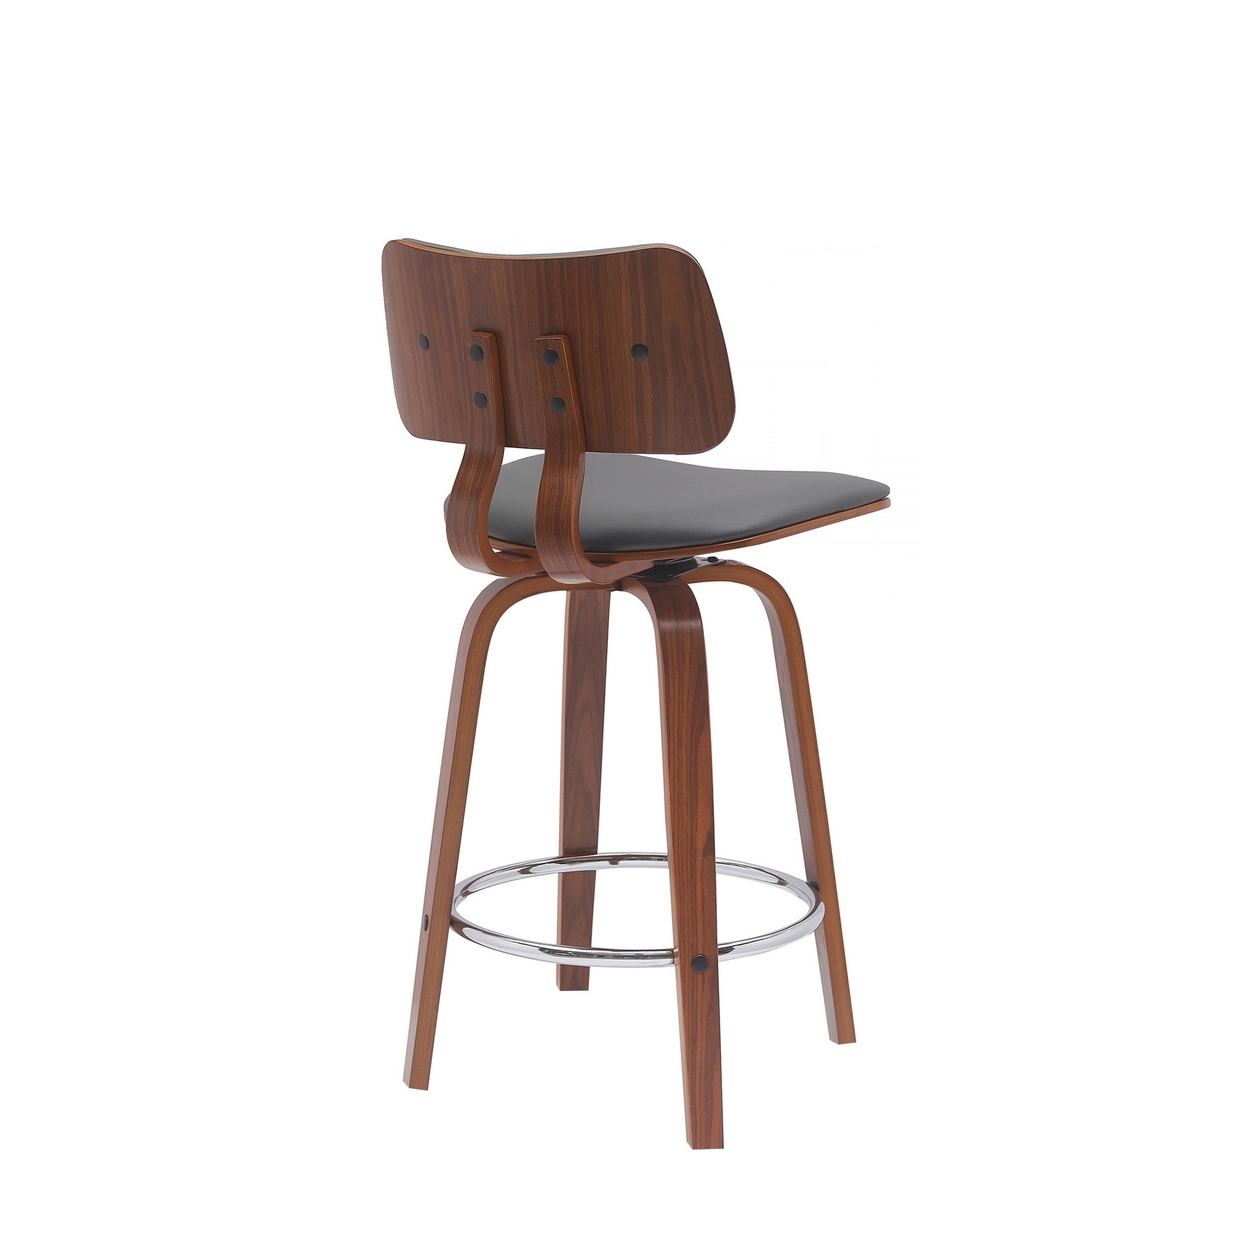 Pino 26 Inch Swivel Counter Stool Chair, Gray Faux Leather, Walnut Brown - Saltoro Sherpi